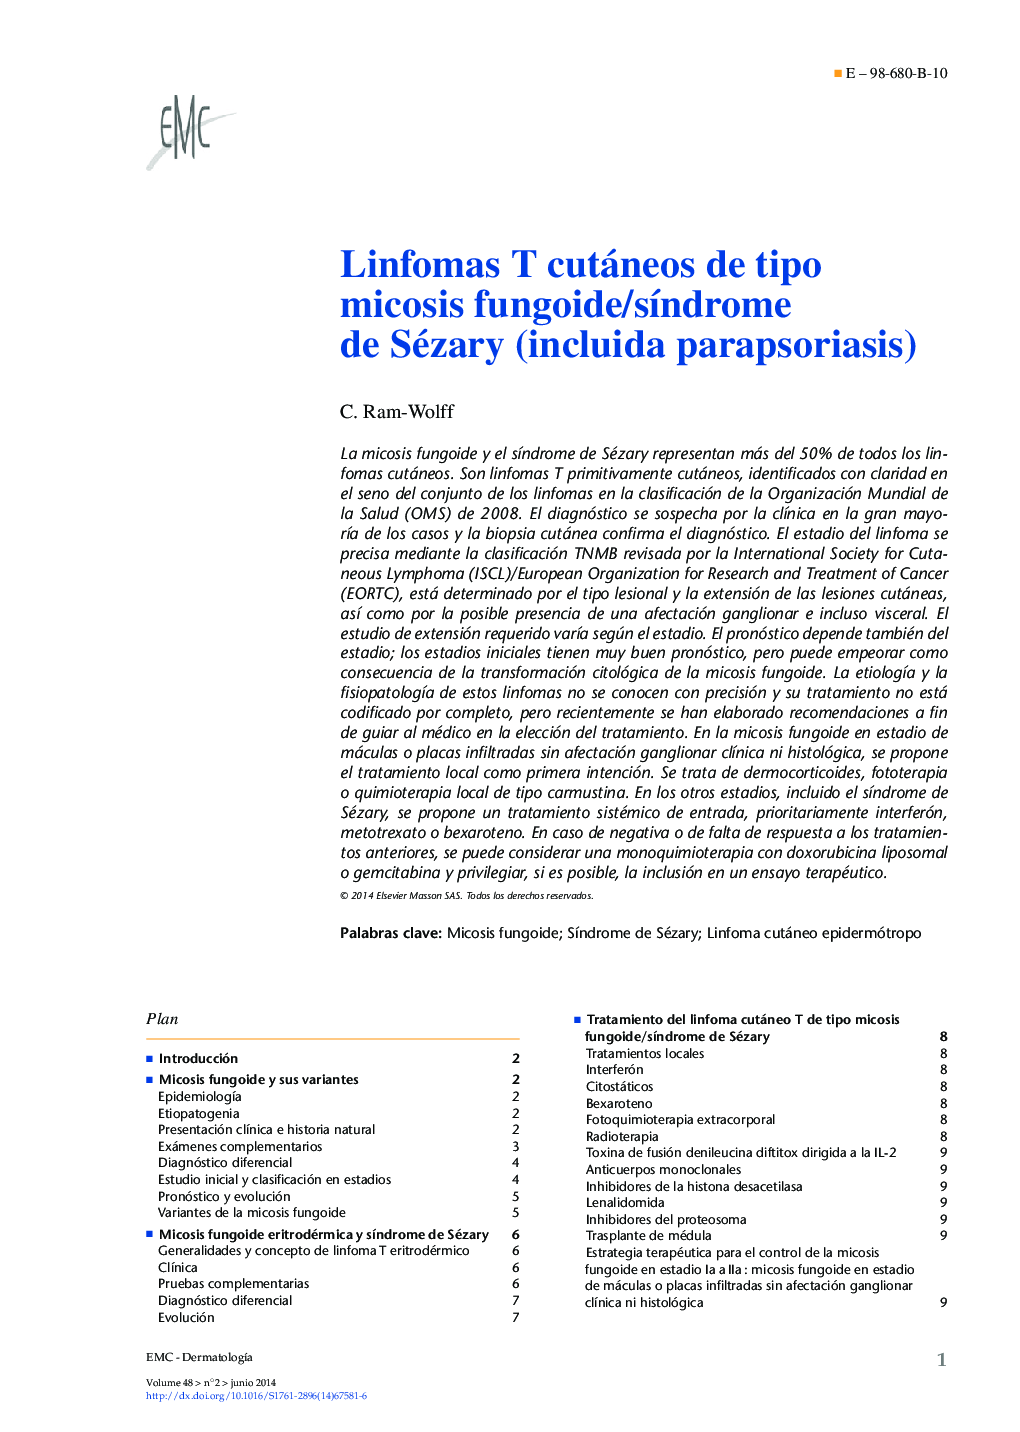 Linfomas T cutáneos de tipo micosis fungoide/sÃ­ndrome de Sézary (incluida parapsoriasis)